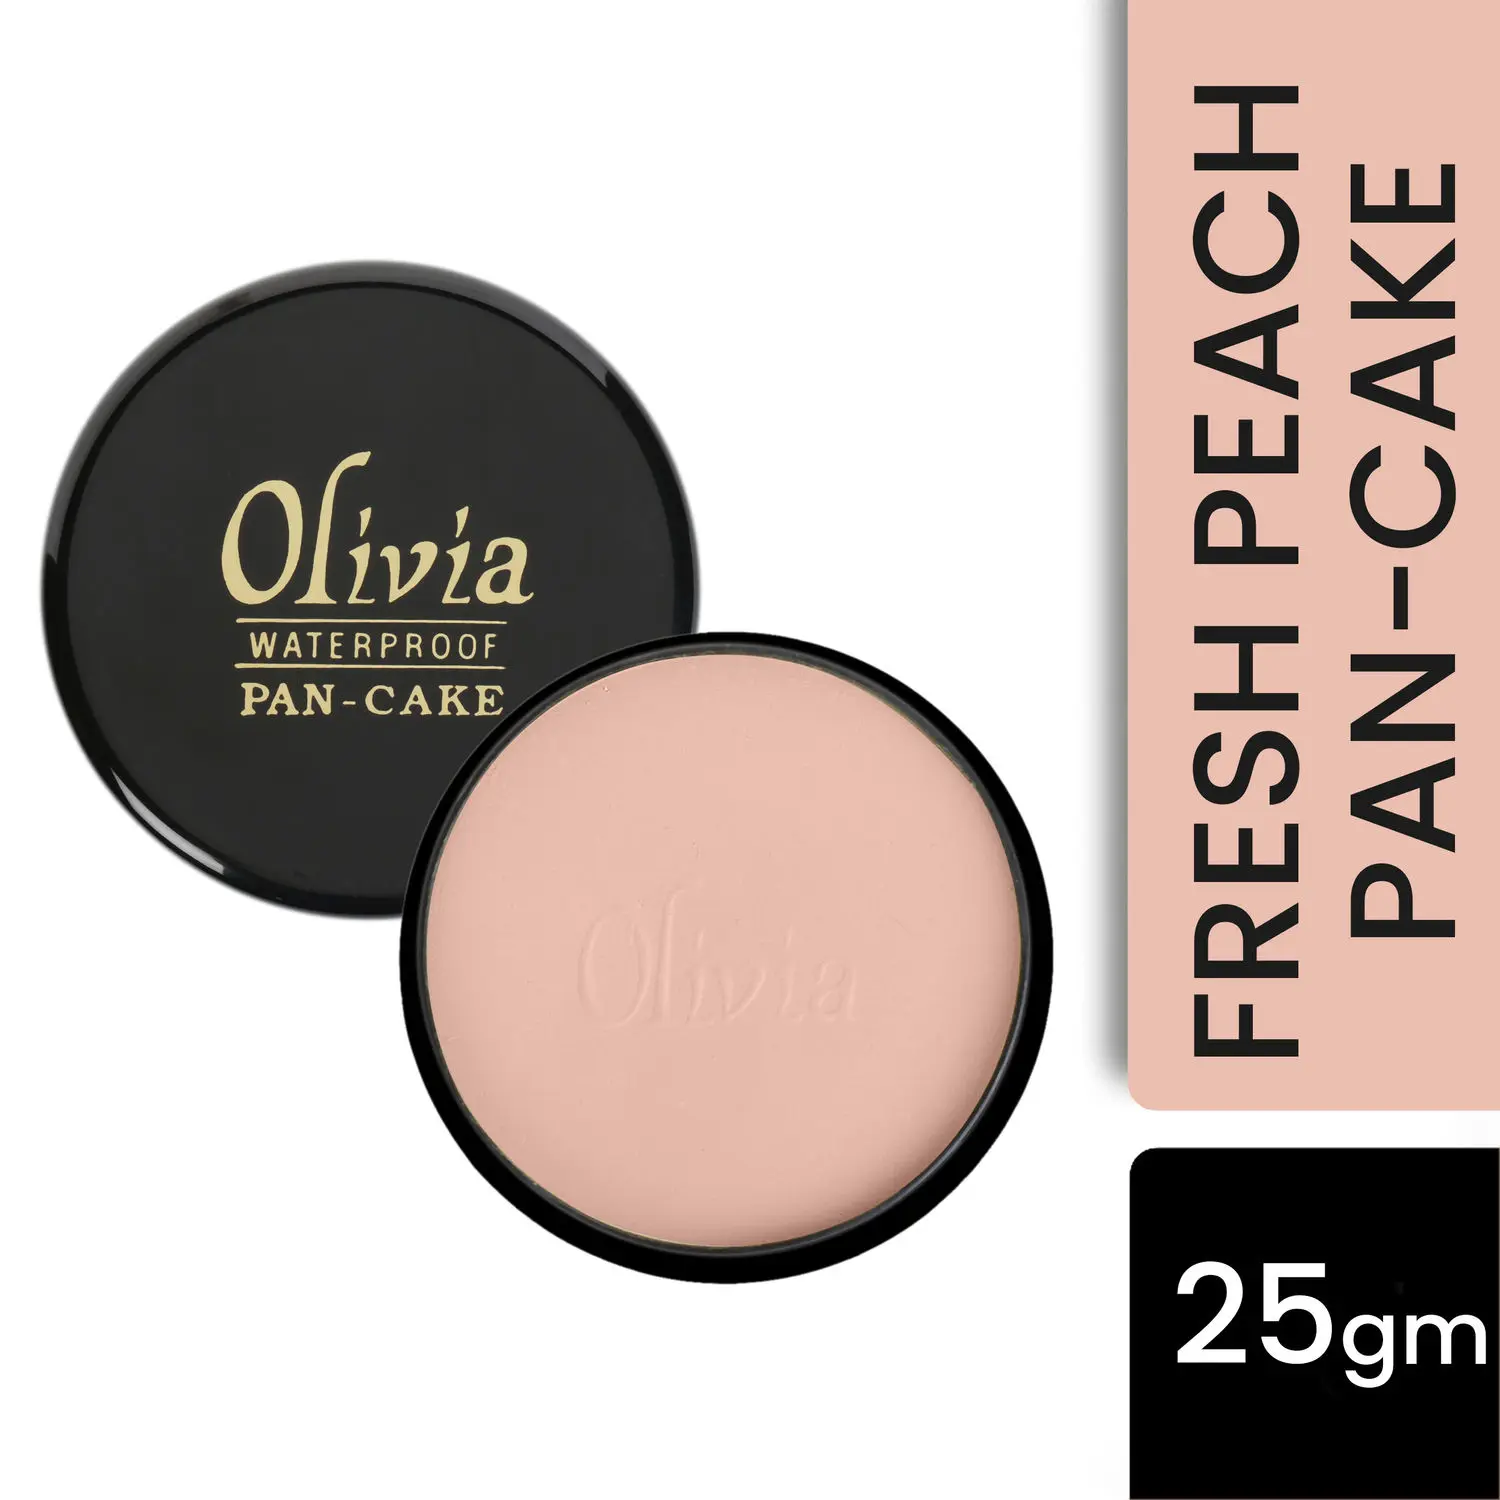 Olivia Waterproof Pan-Cake Fresh Peach (25 g)